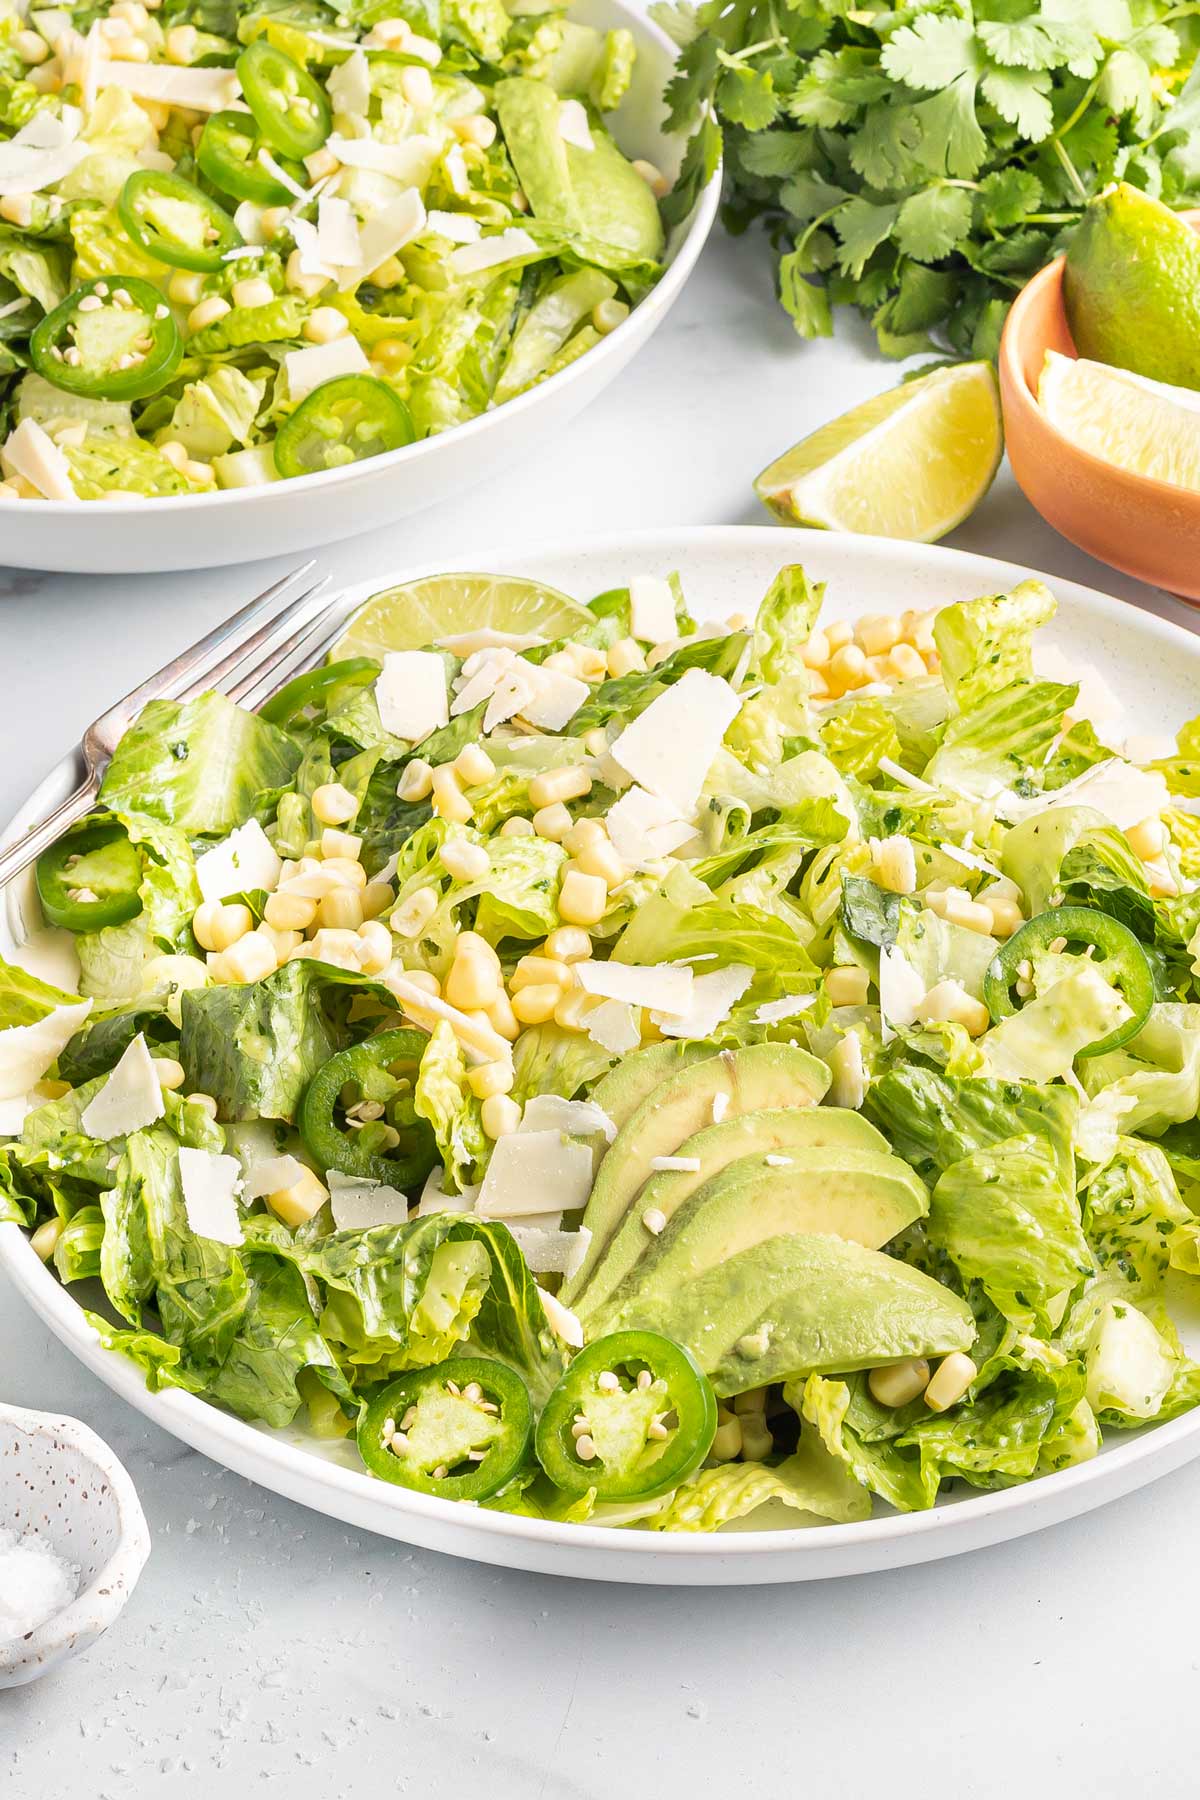 Mexican Caesar Salad